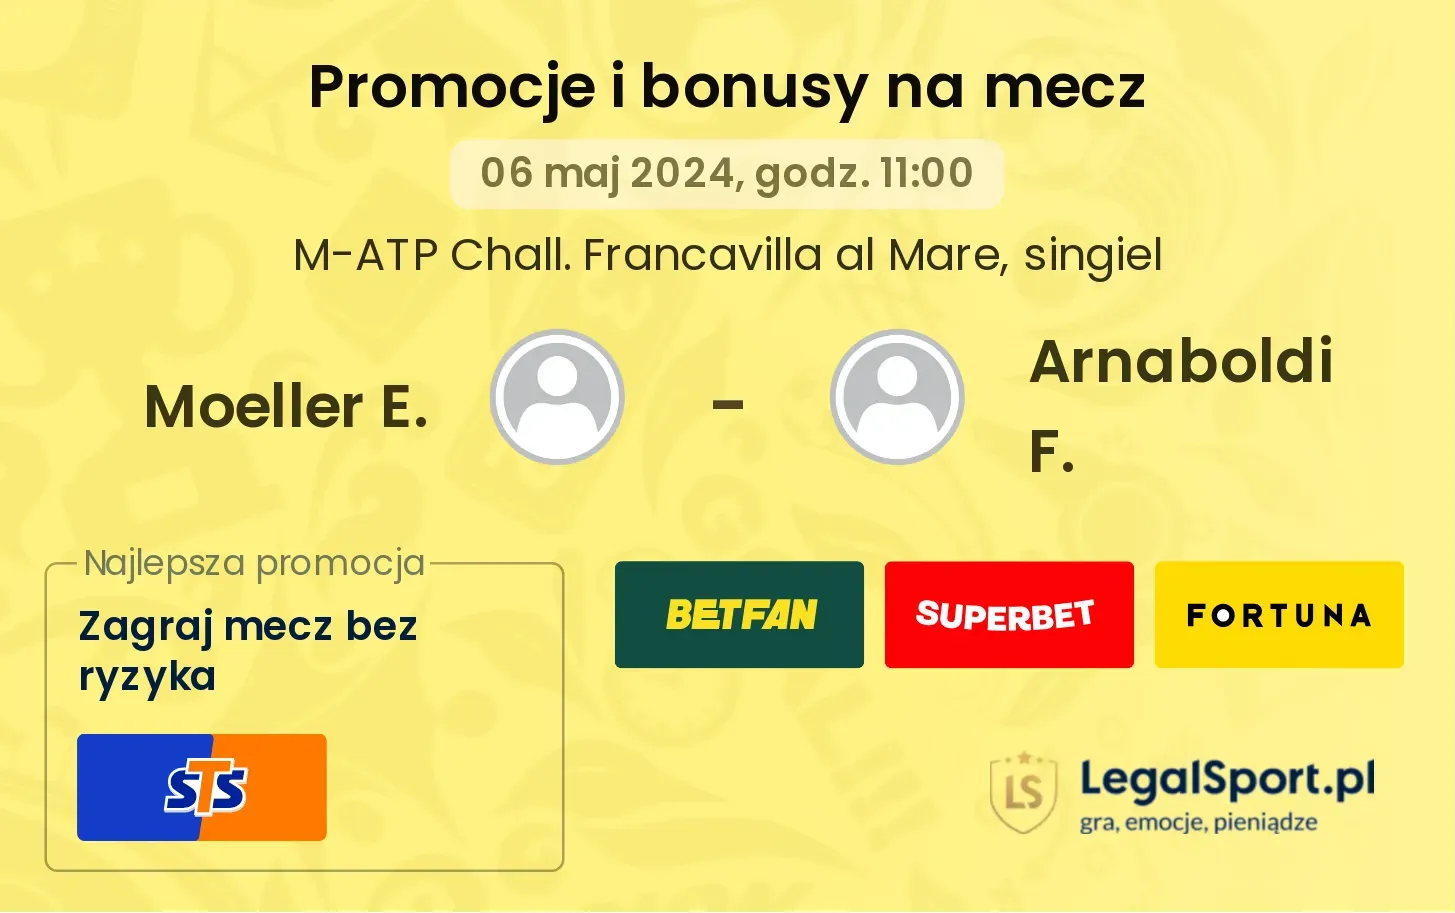 Moeller E. - Arnaboldi F. promocje bonusy na mecz